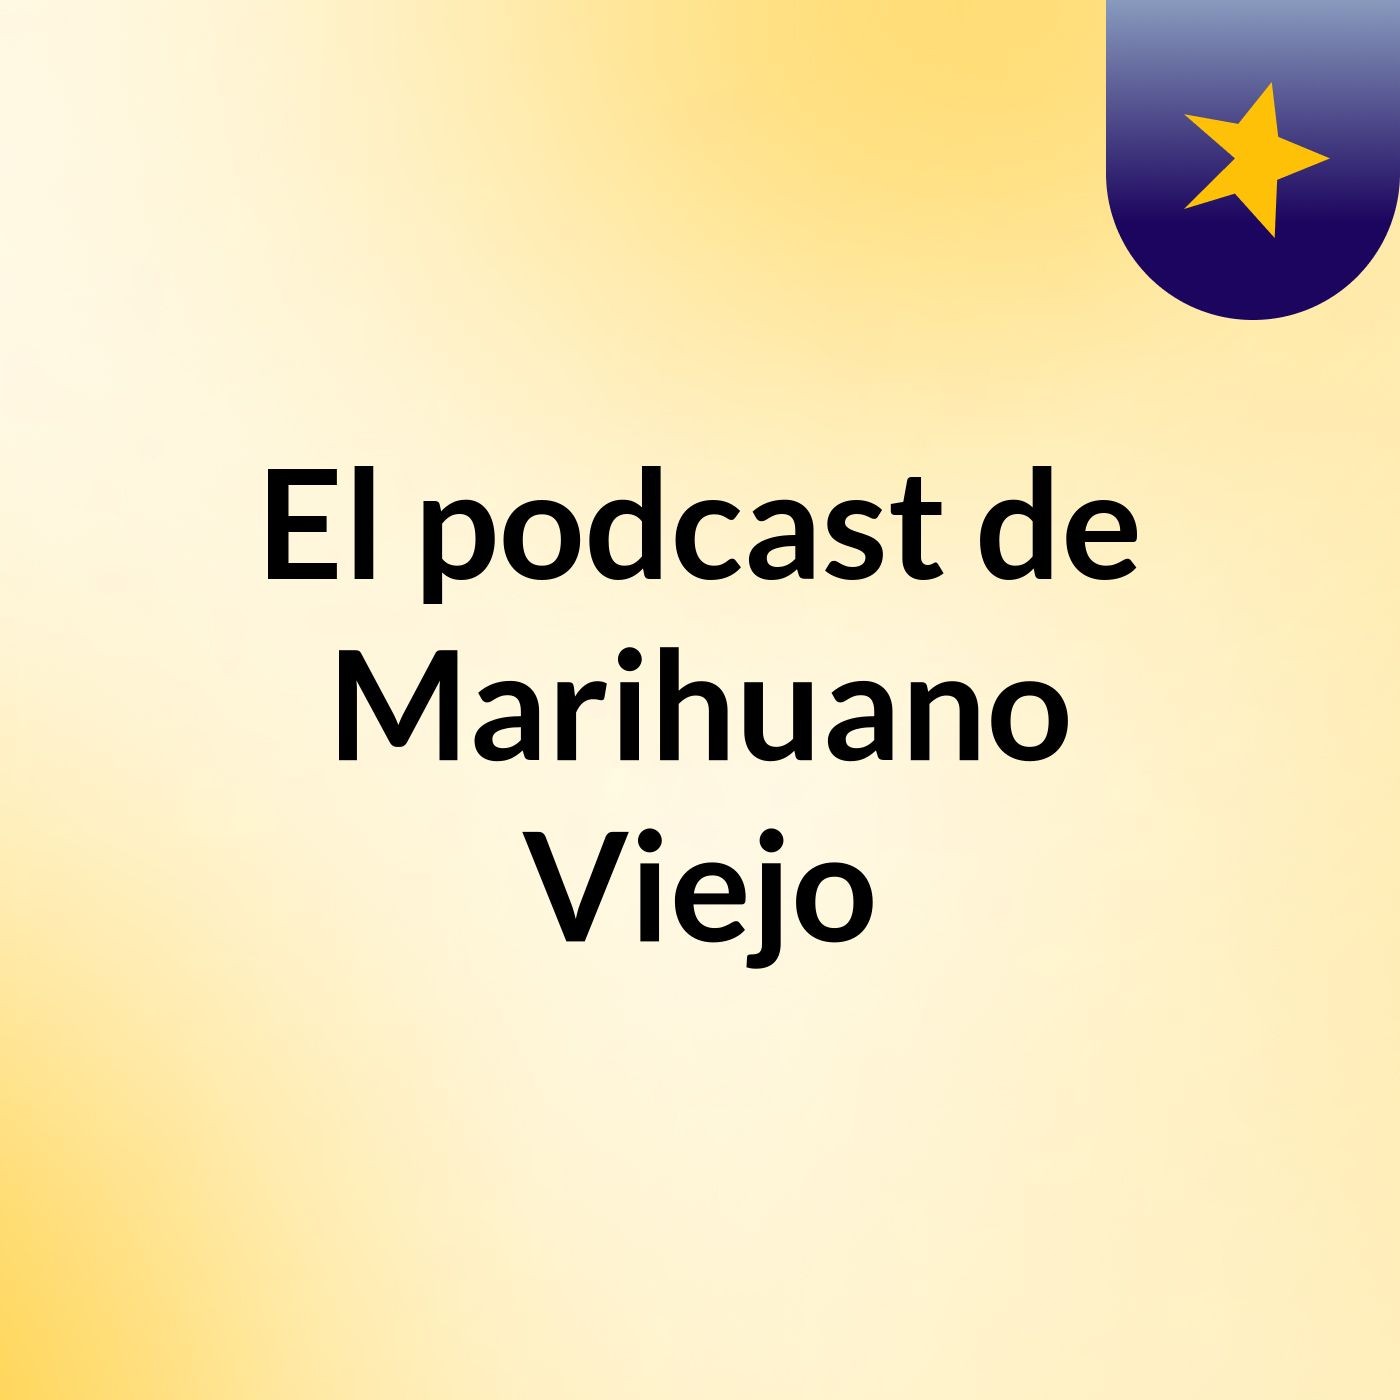 El podcast de Marihuano Viejo